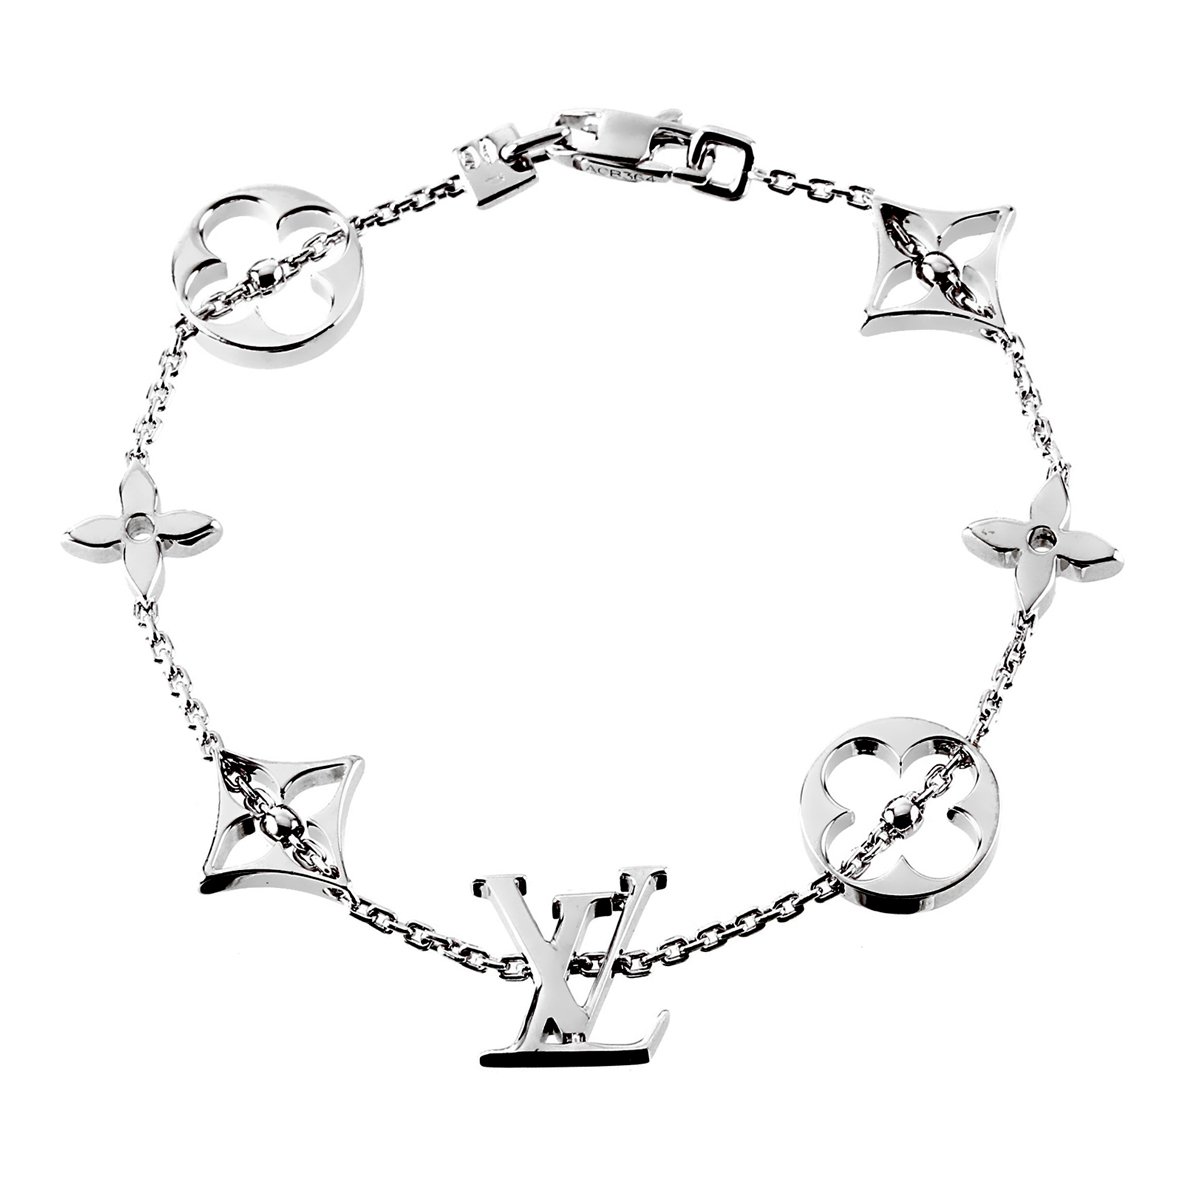 Louis Vuitton Monogram Flower Motif Cuff Bracelet